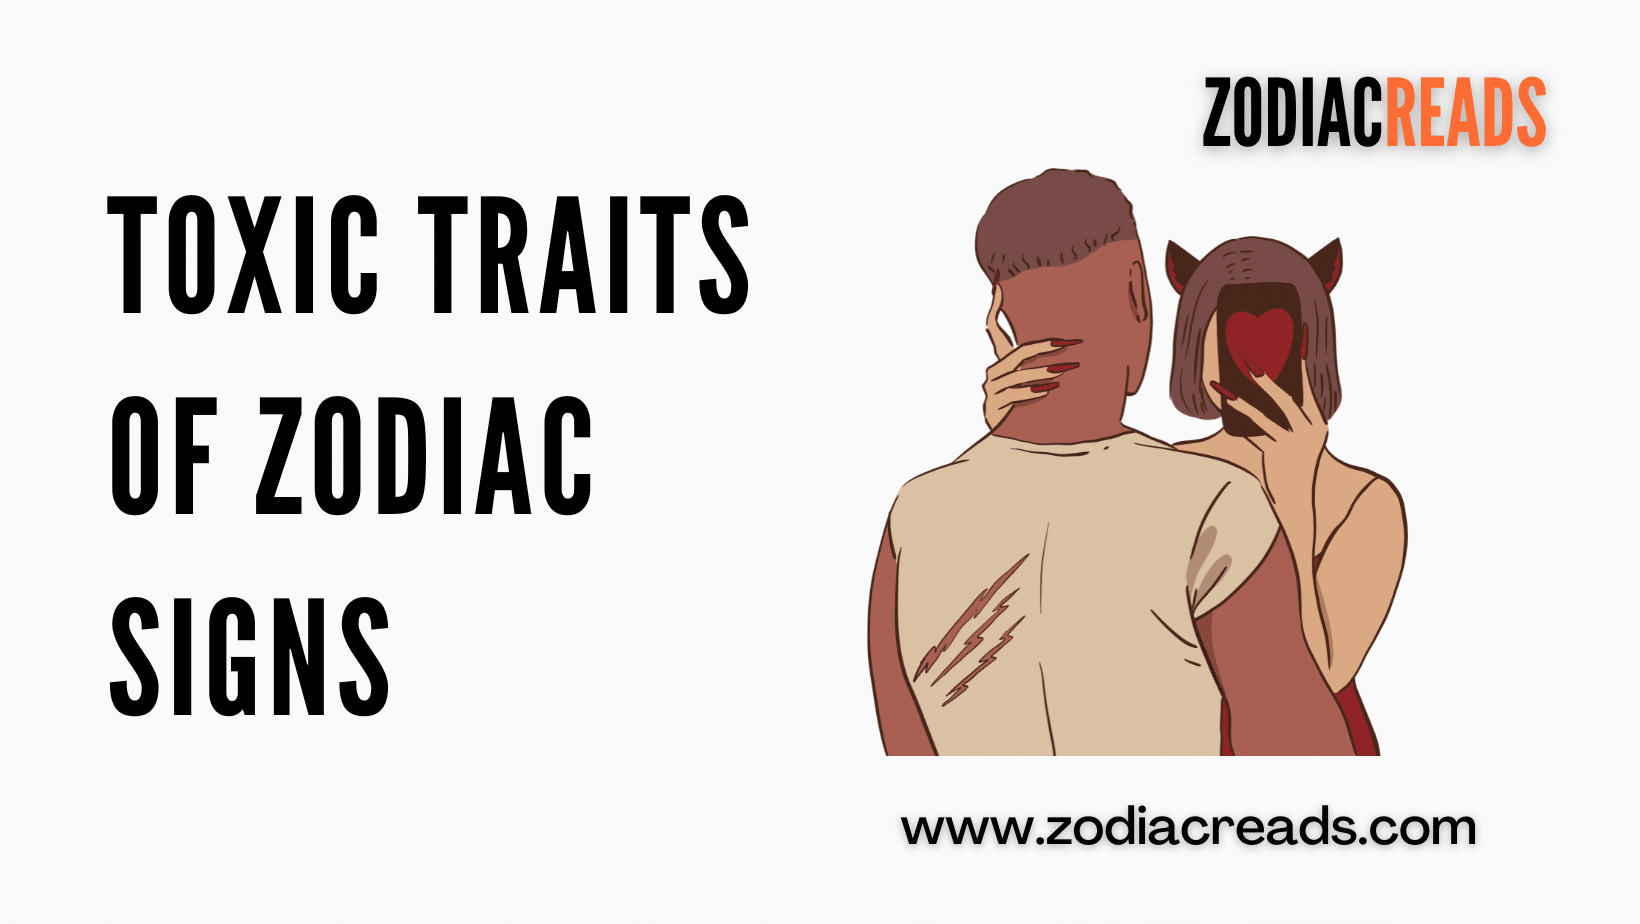 Toxic traits of Zodiac Signs